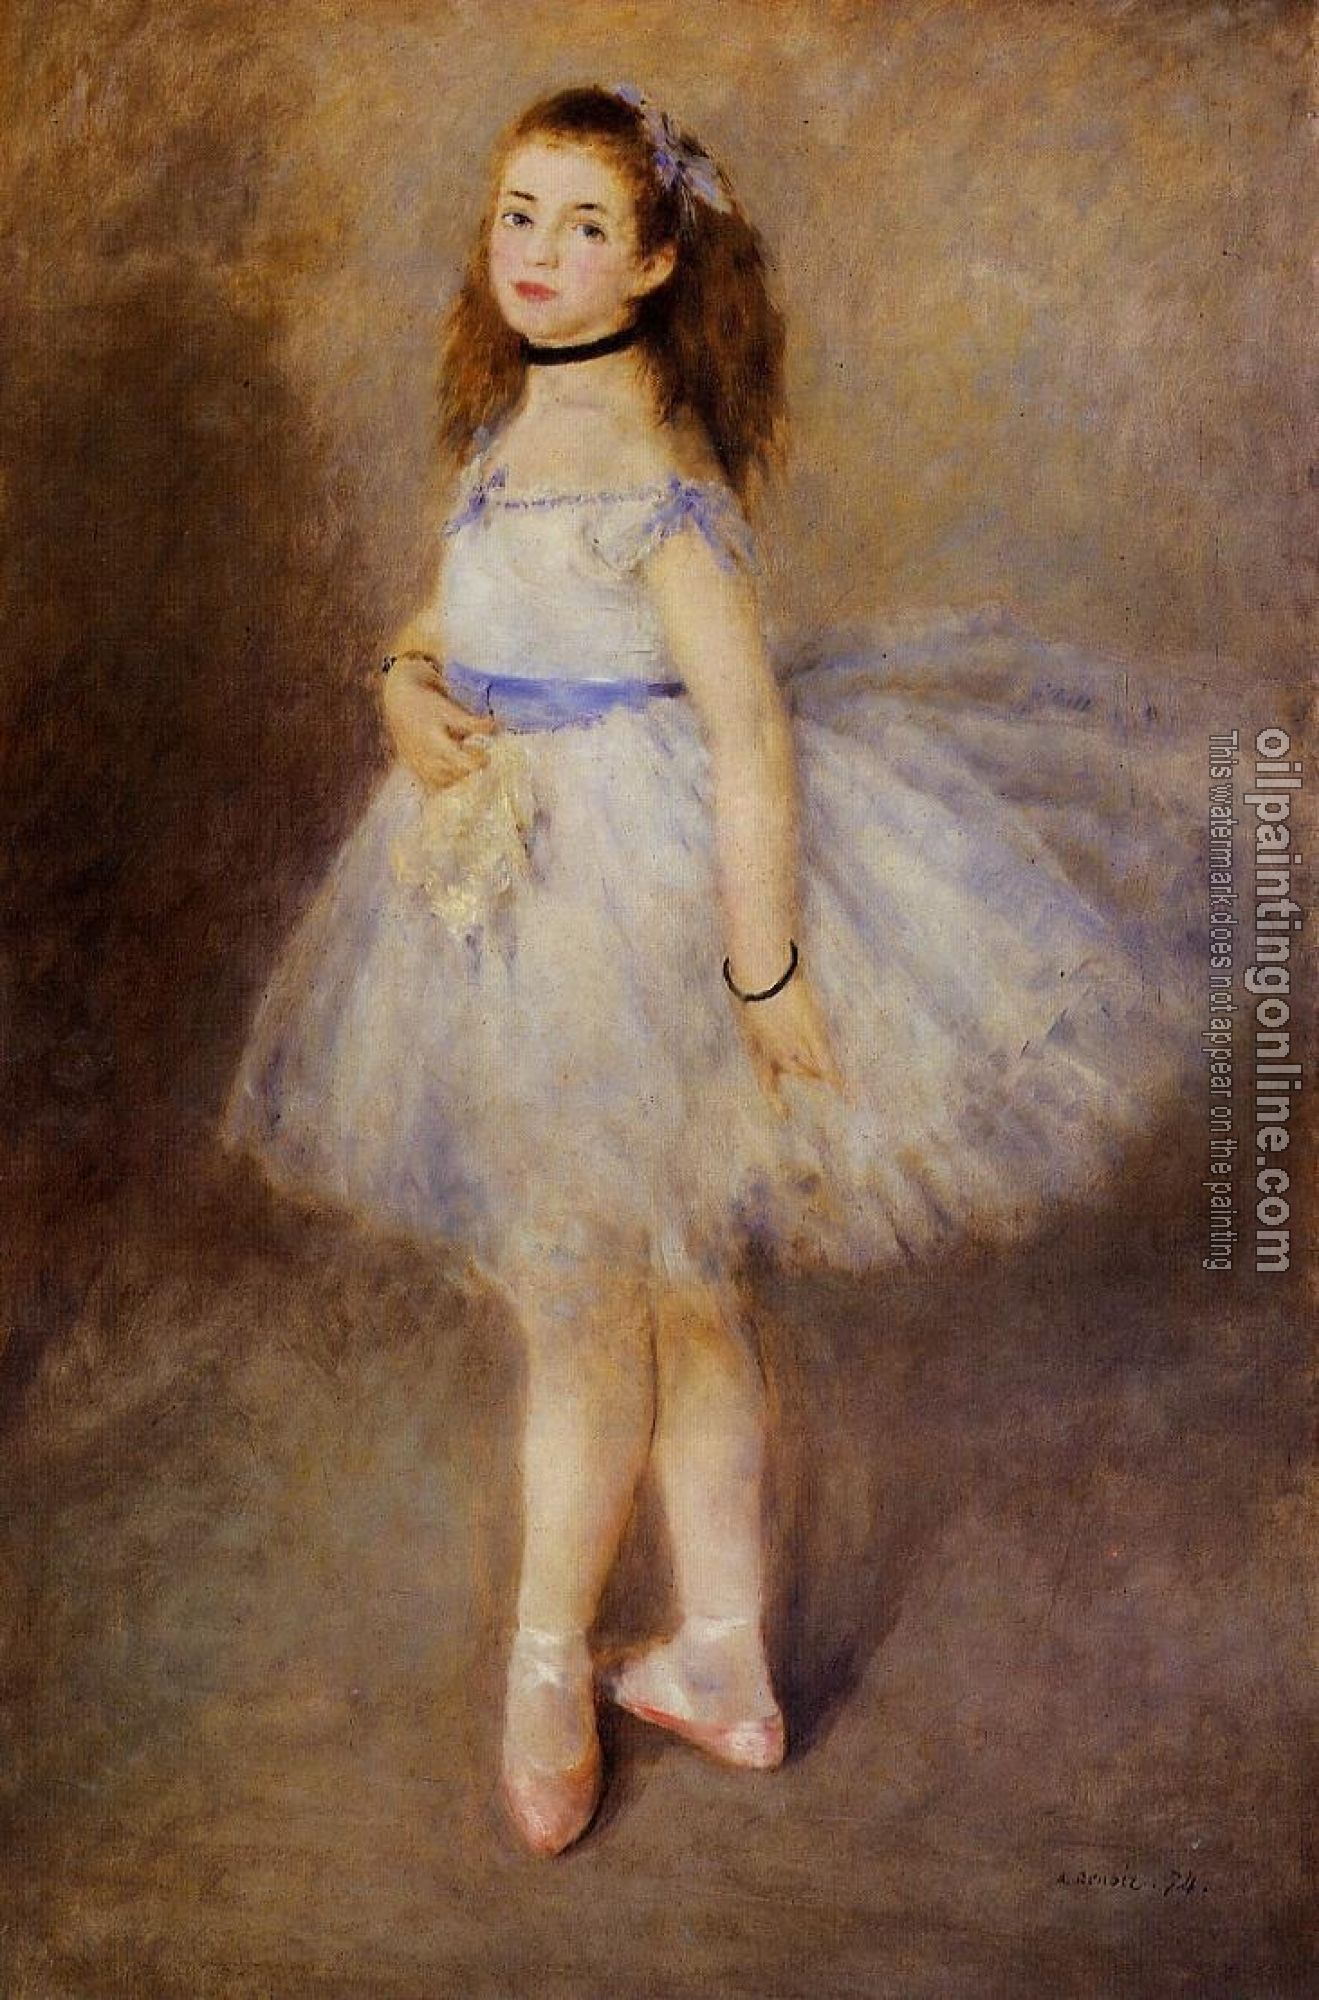 Renoir, Pierre Auguste - Dancer